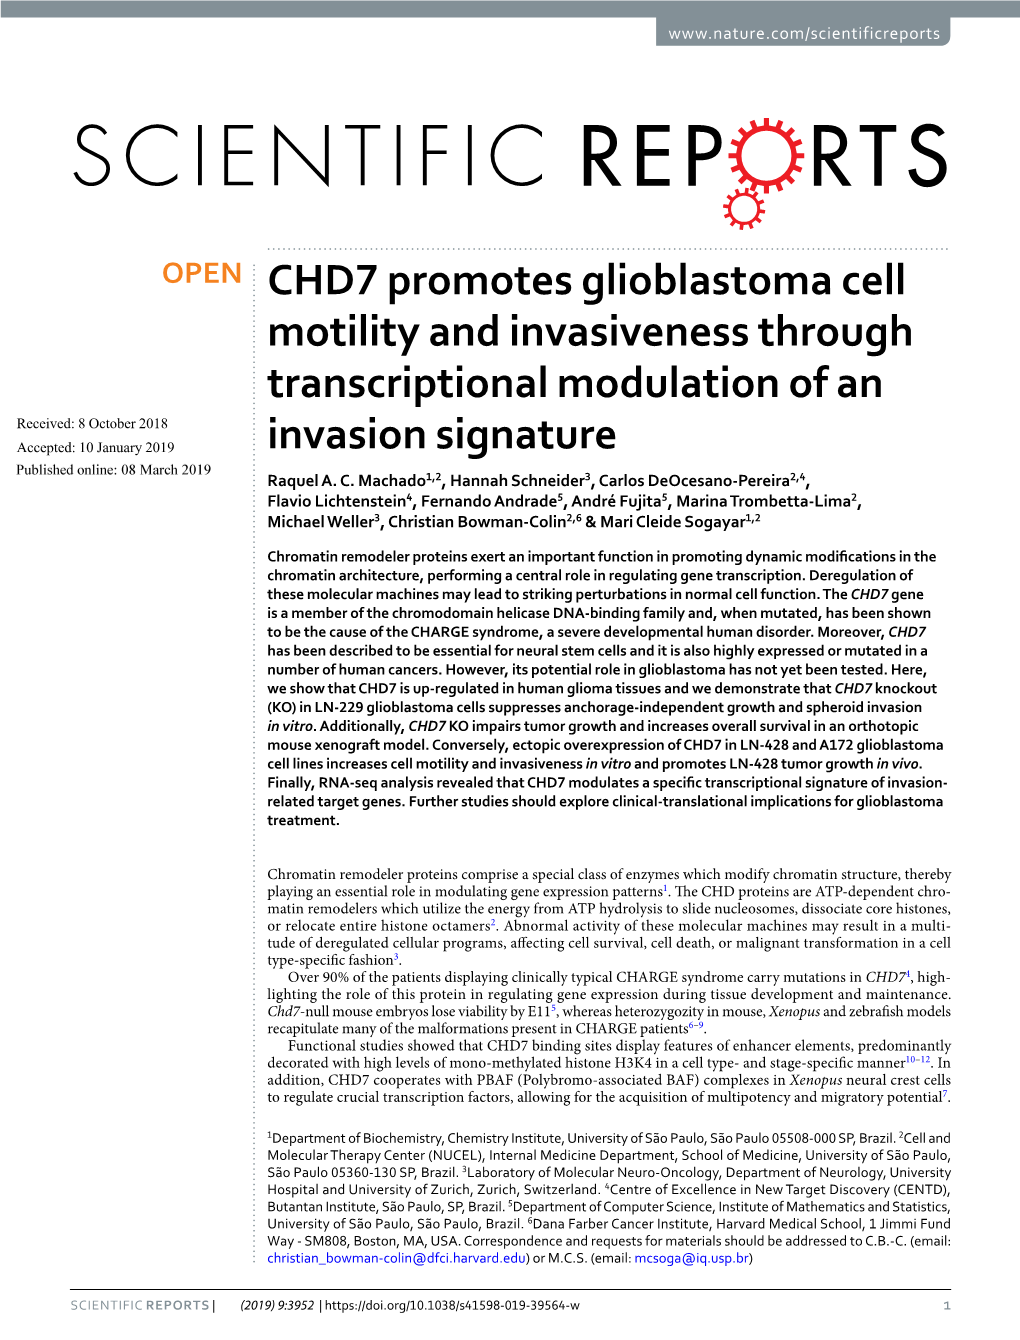 CHD7 Promotes Glioblastoma Cell Motility and Invasiveness Through